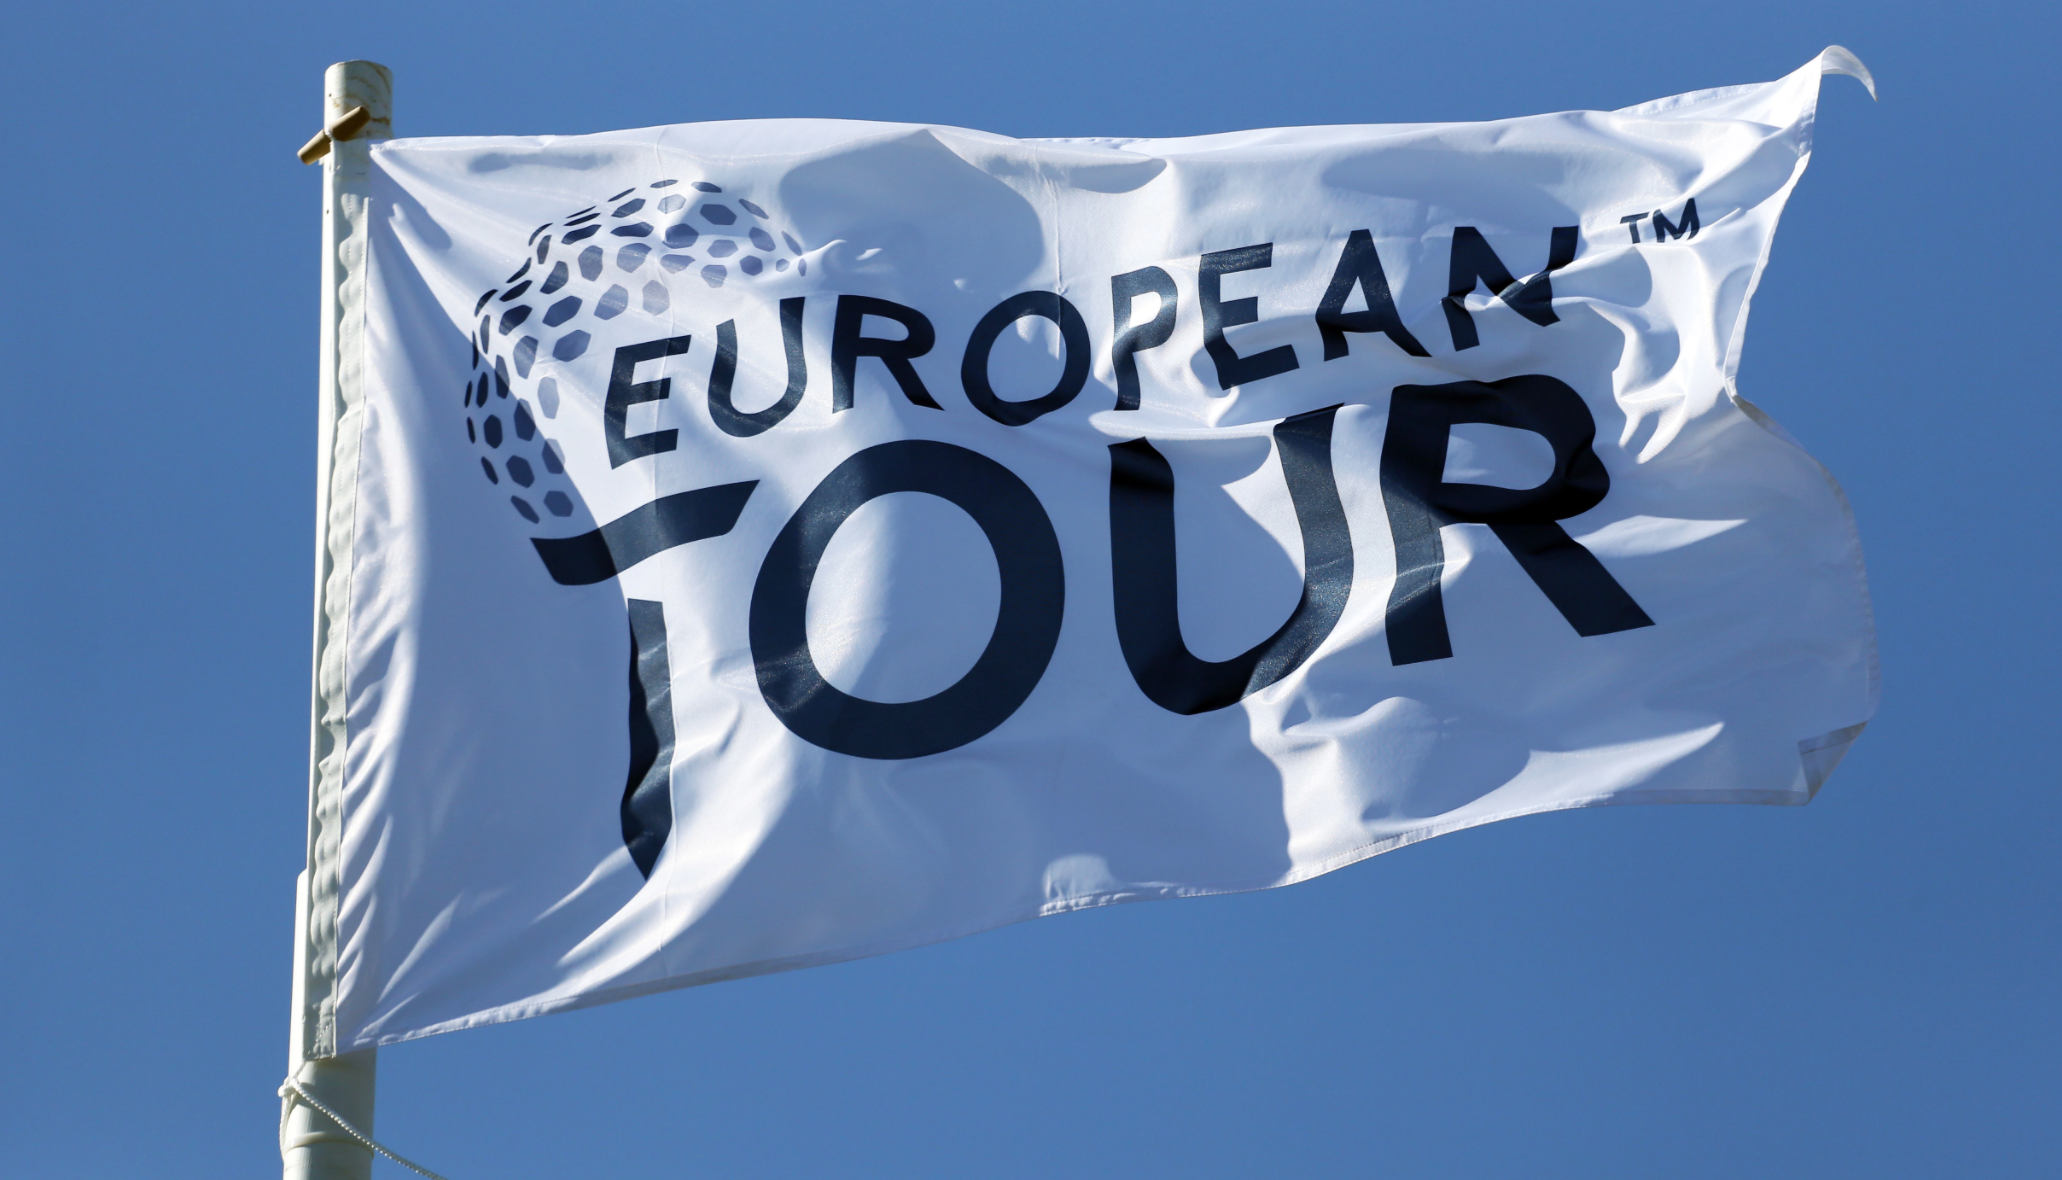 European Tour lên lịch trở lại vào cuối tháng 7